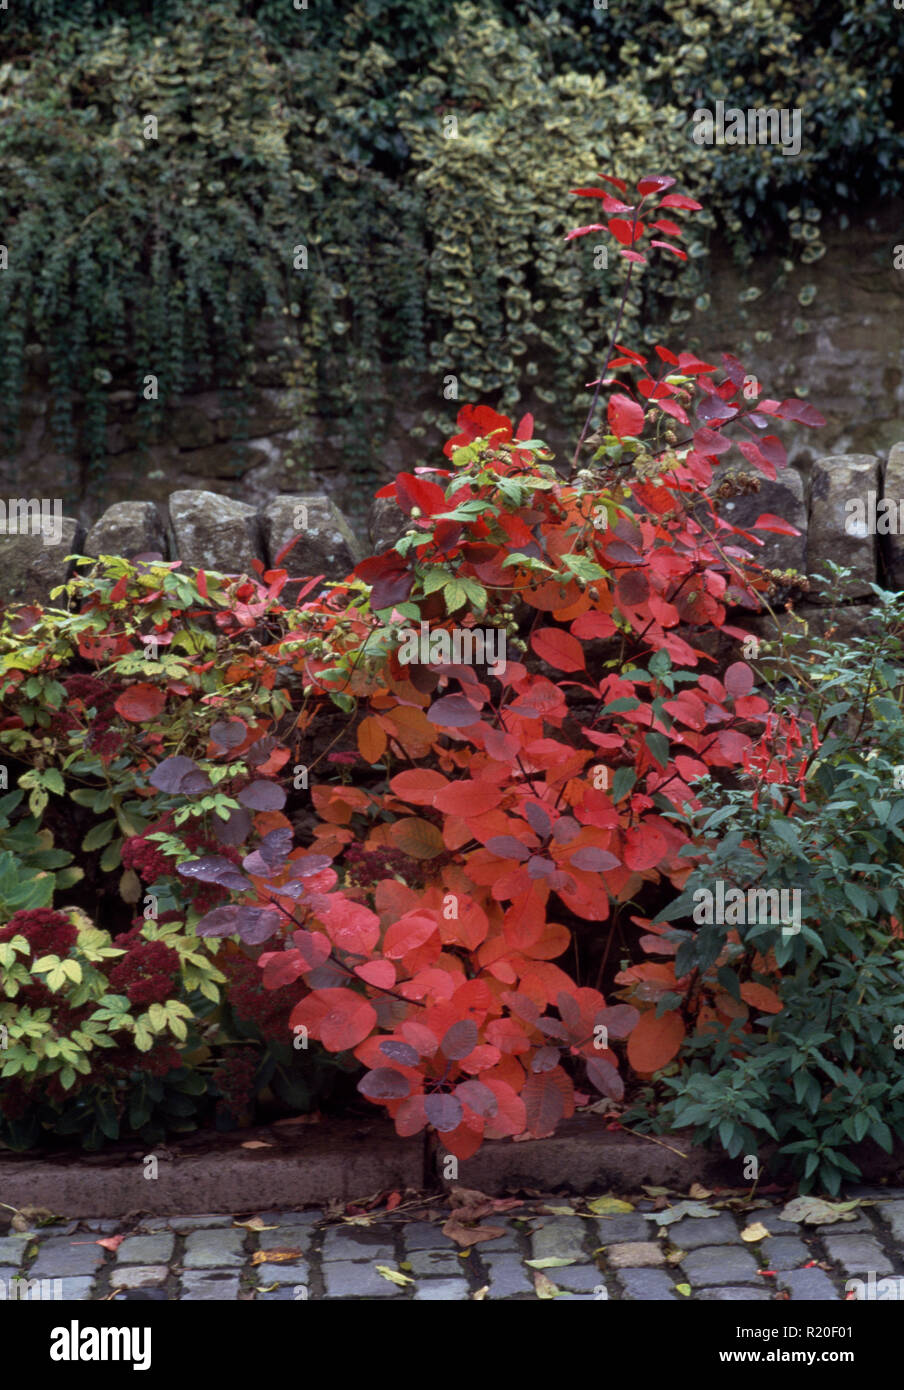 Red leaved autumn shrub in border Stock Photo